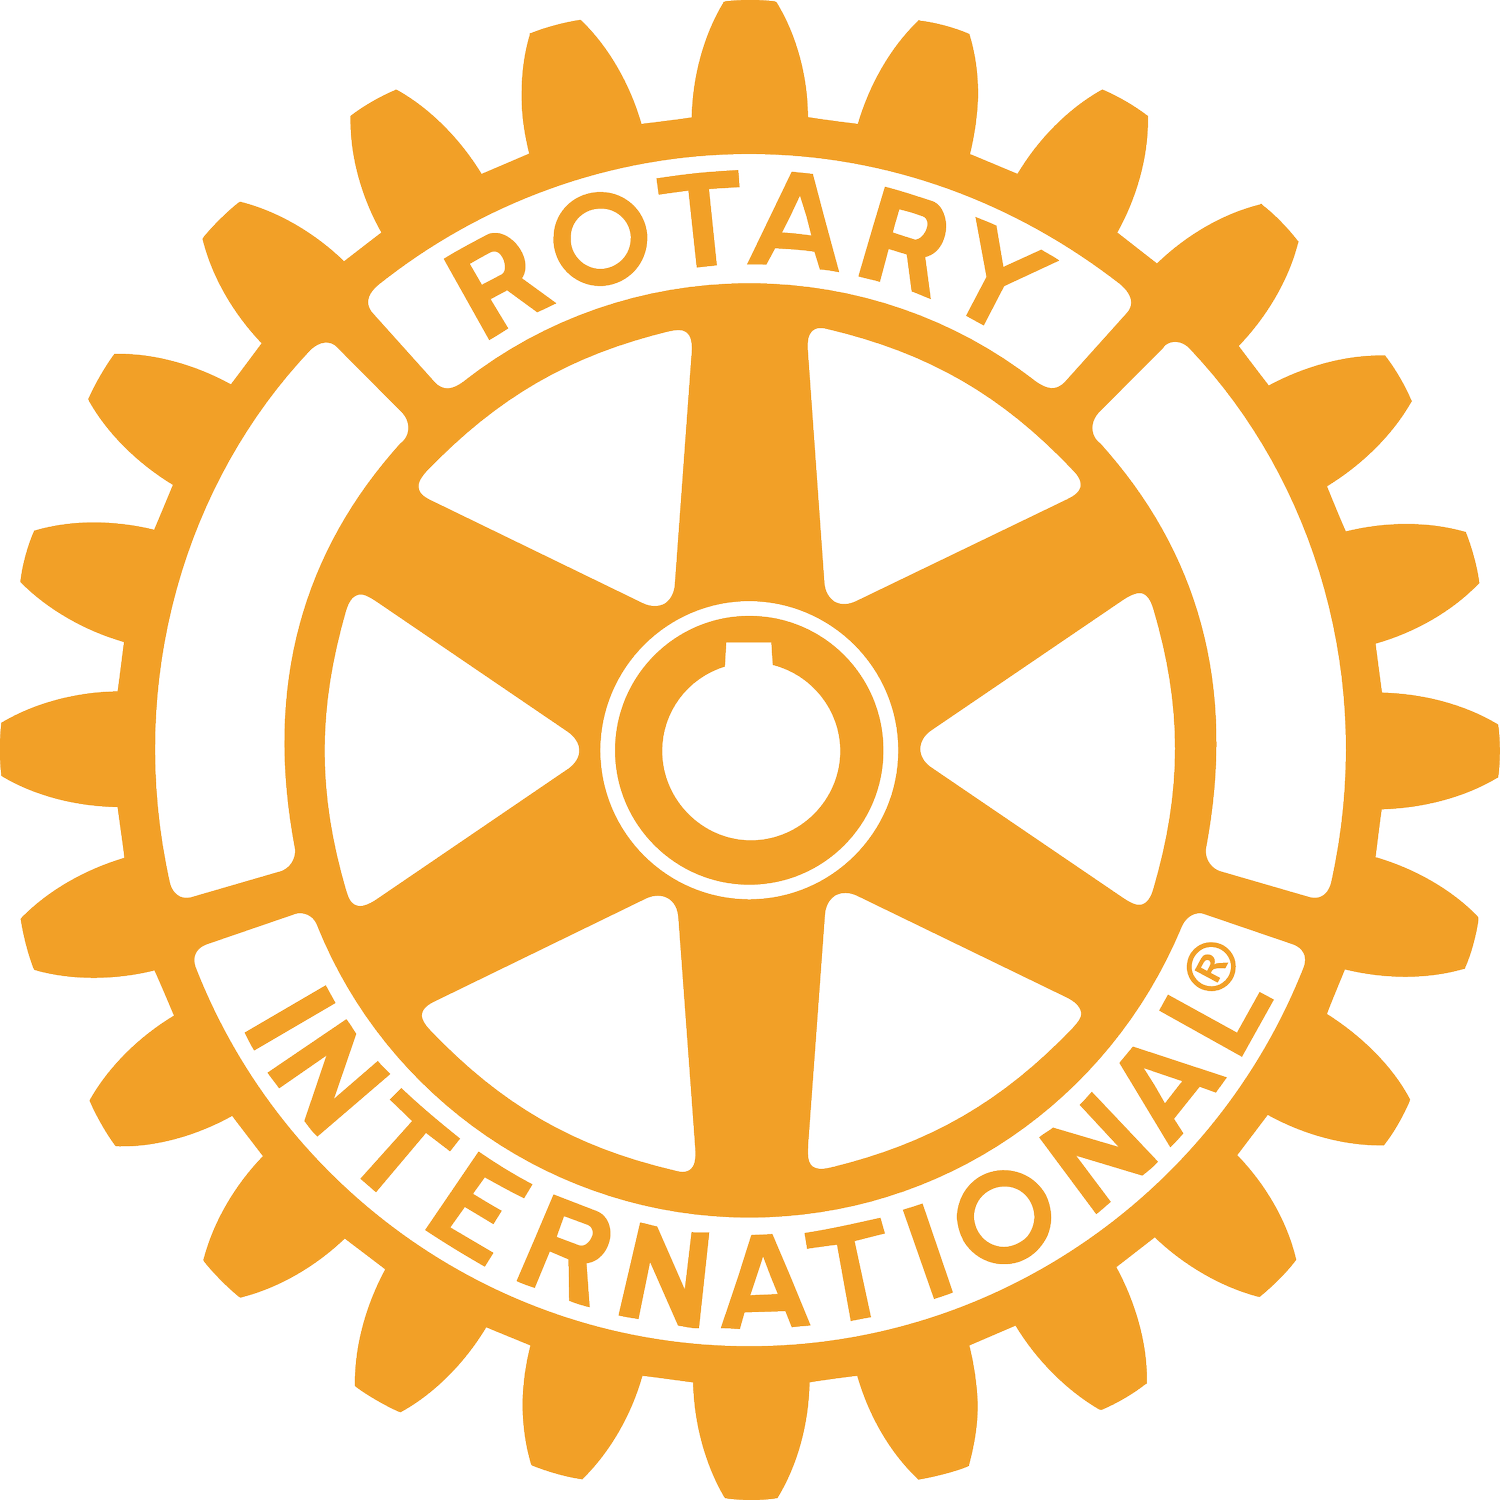 The Rotary Club of Fernie